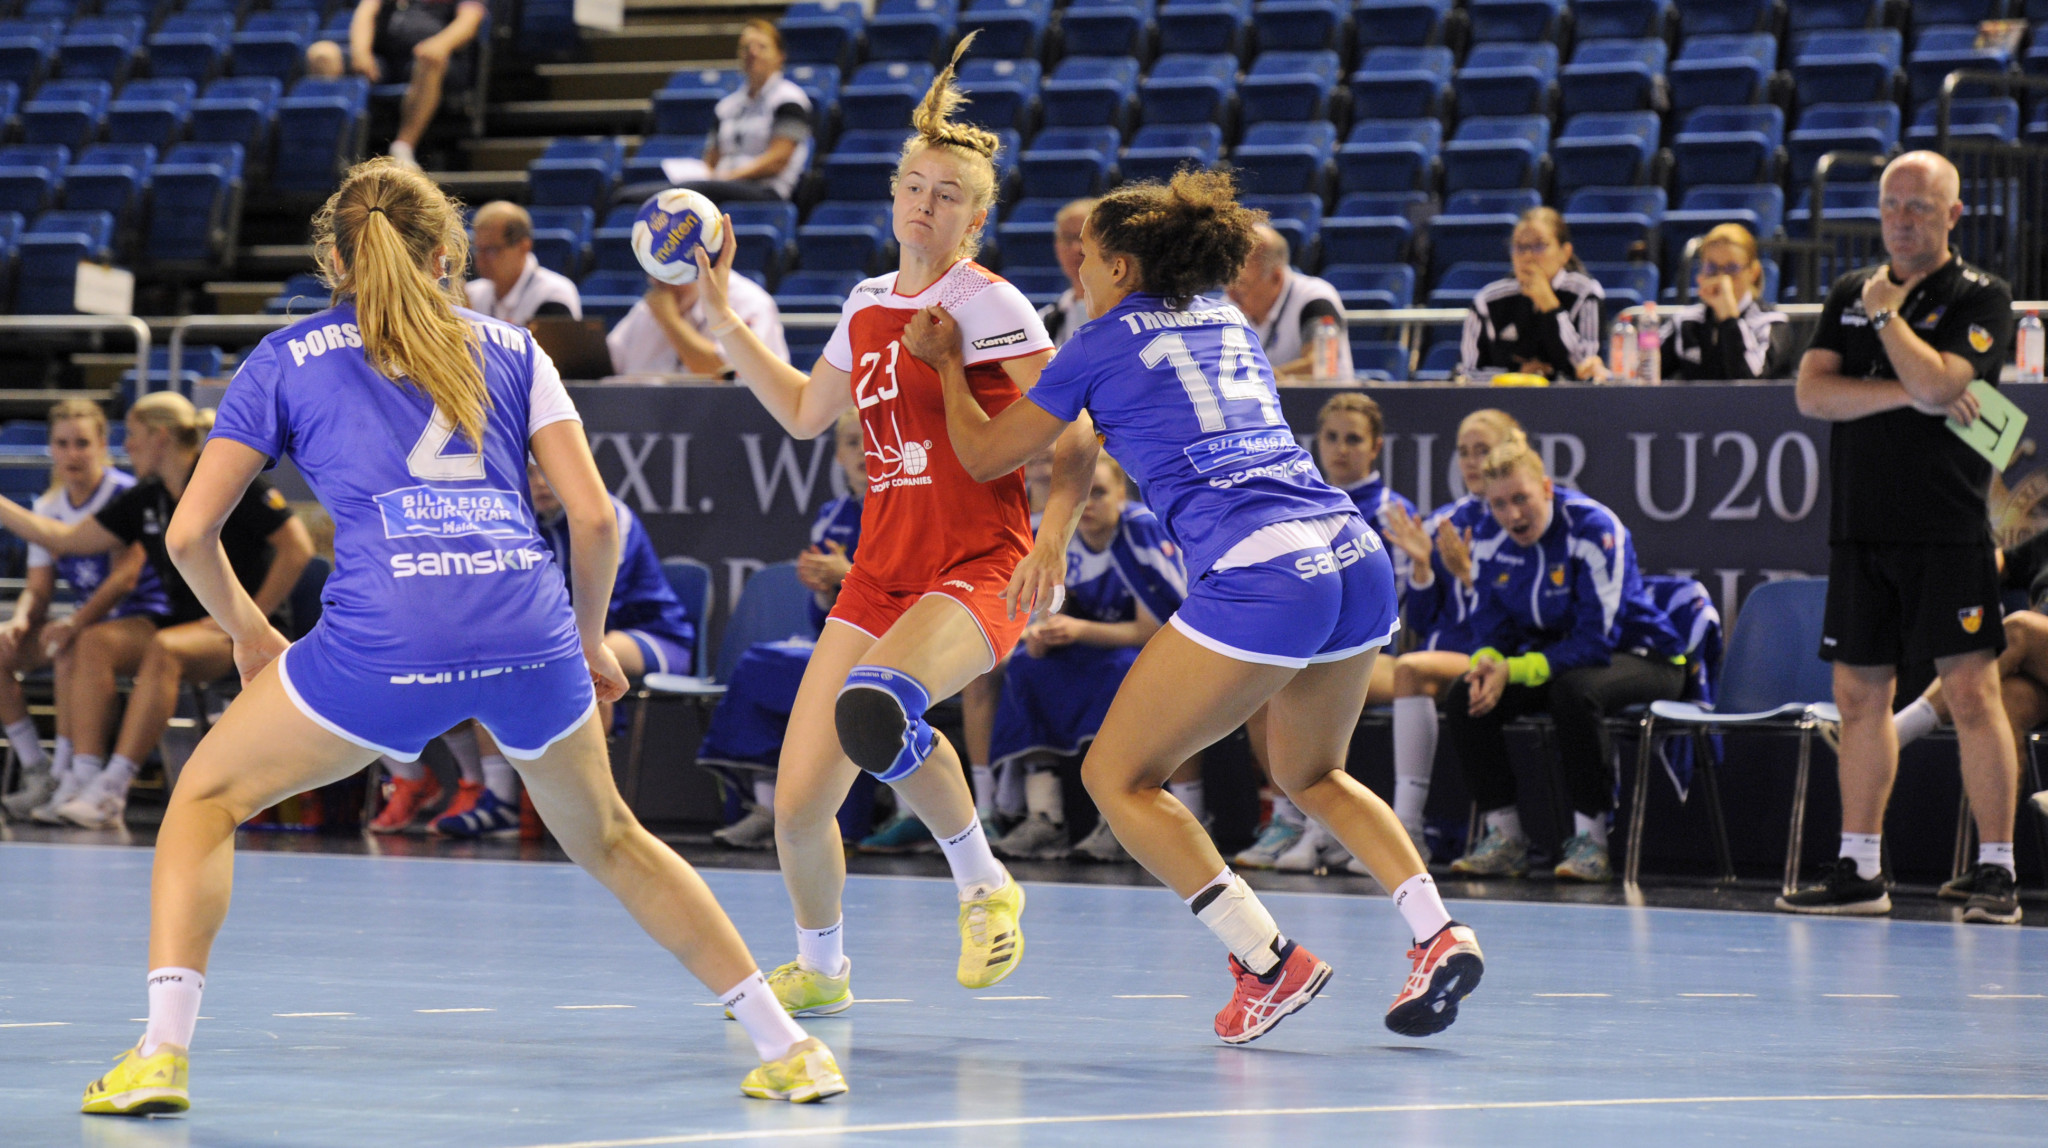 Holders Denmark among qualifiers at Women's Junior World Handball Championship